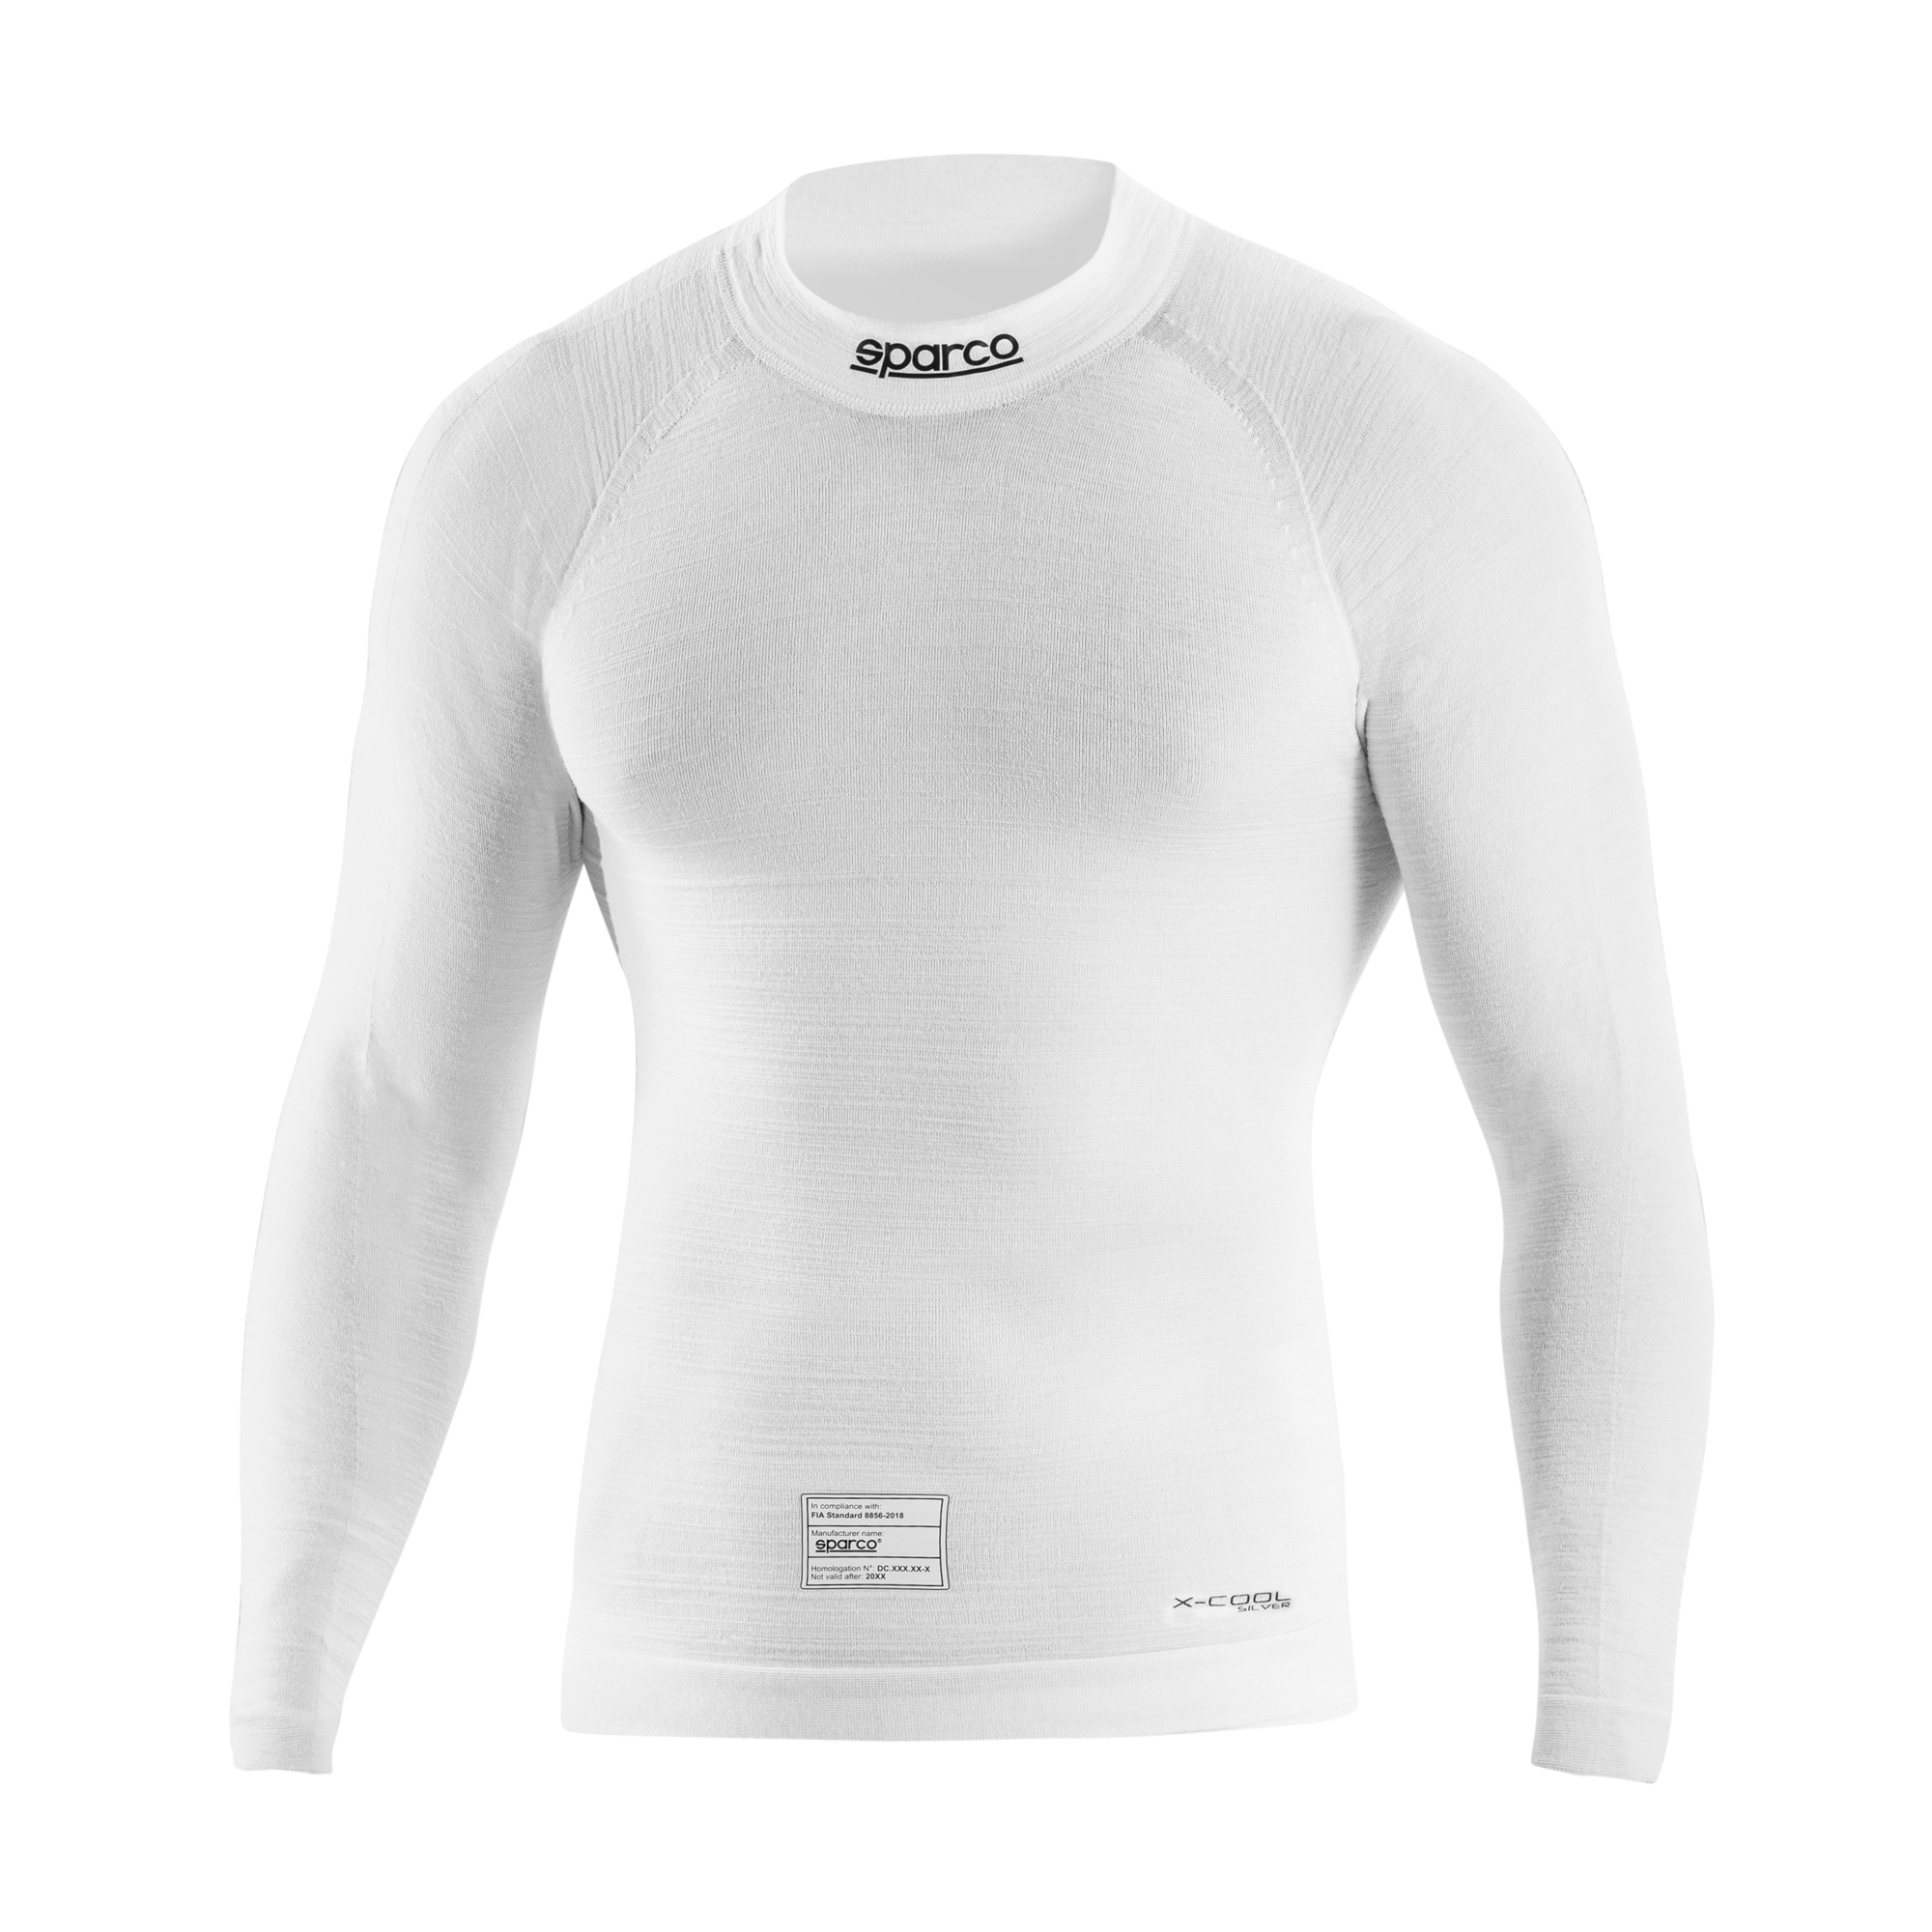 Racing underwear kit Sparco RW-11 EVO White